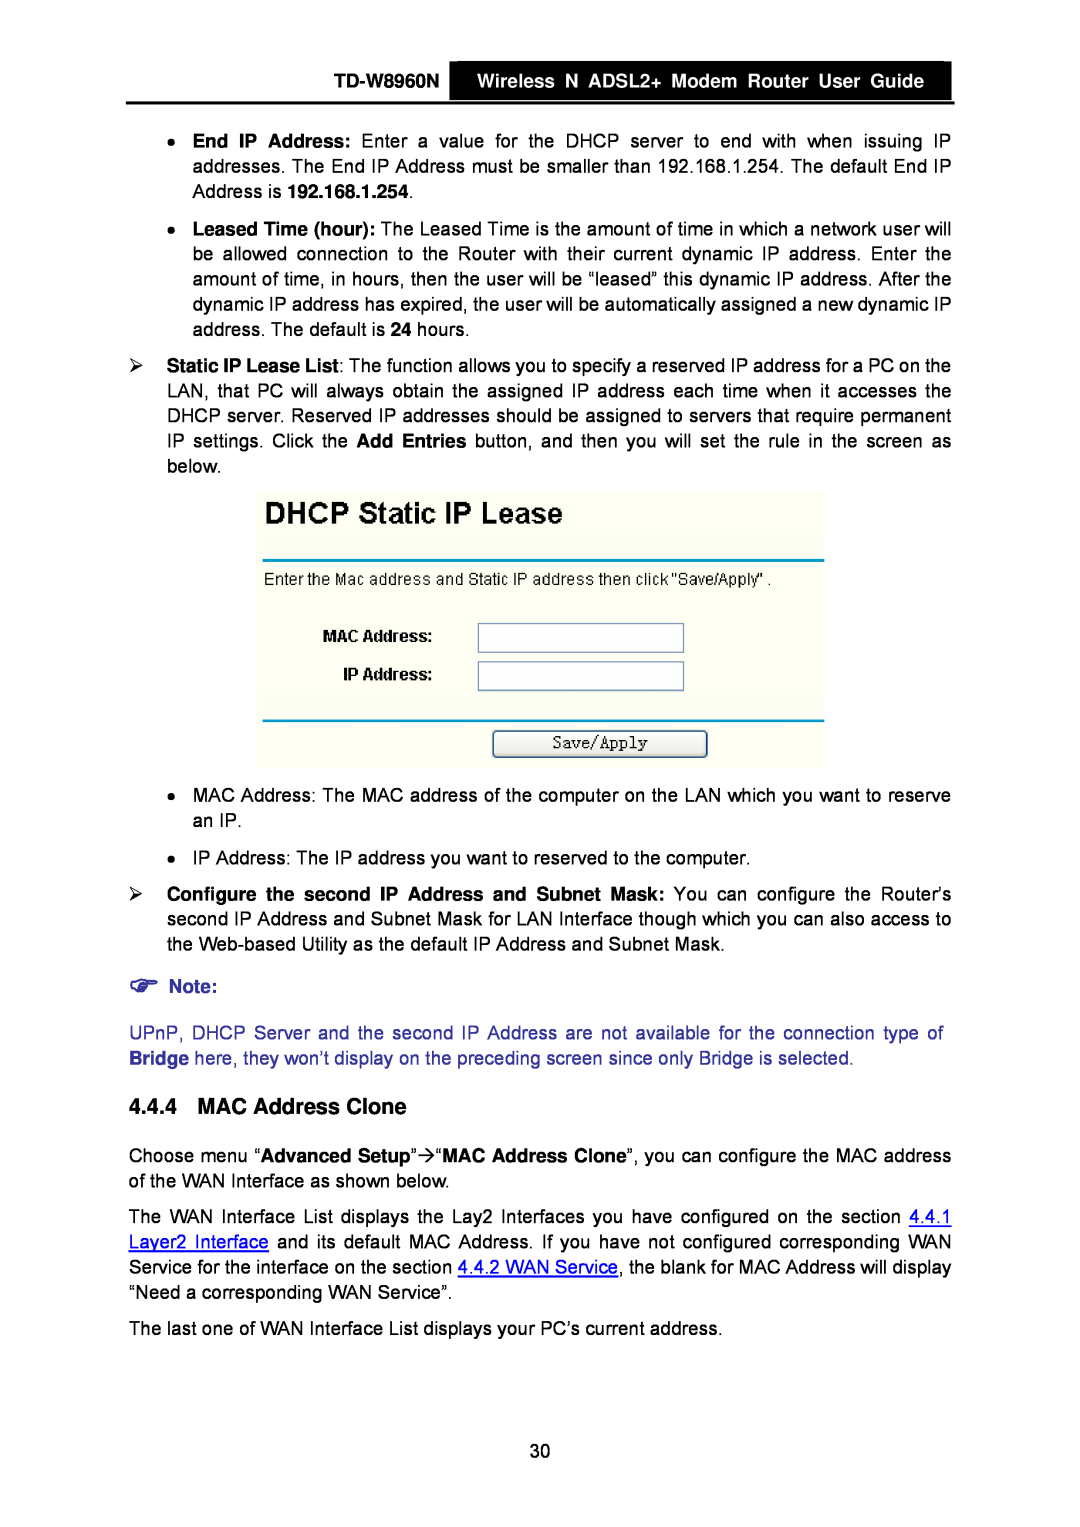 TP-Link manual MAC Address Clone, TD-W8960N Wireless N ADSL2+ Modem Router User Guide 